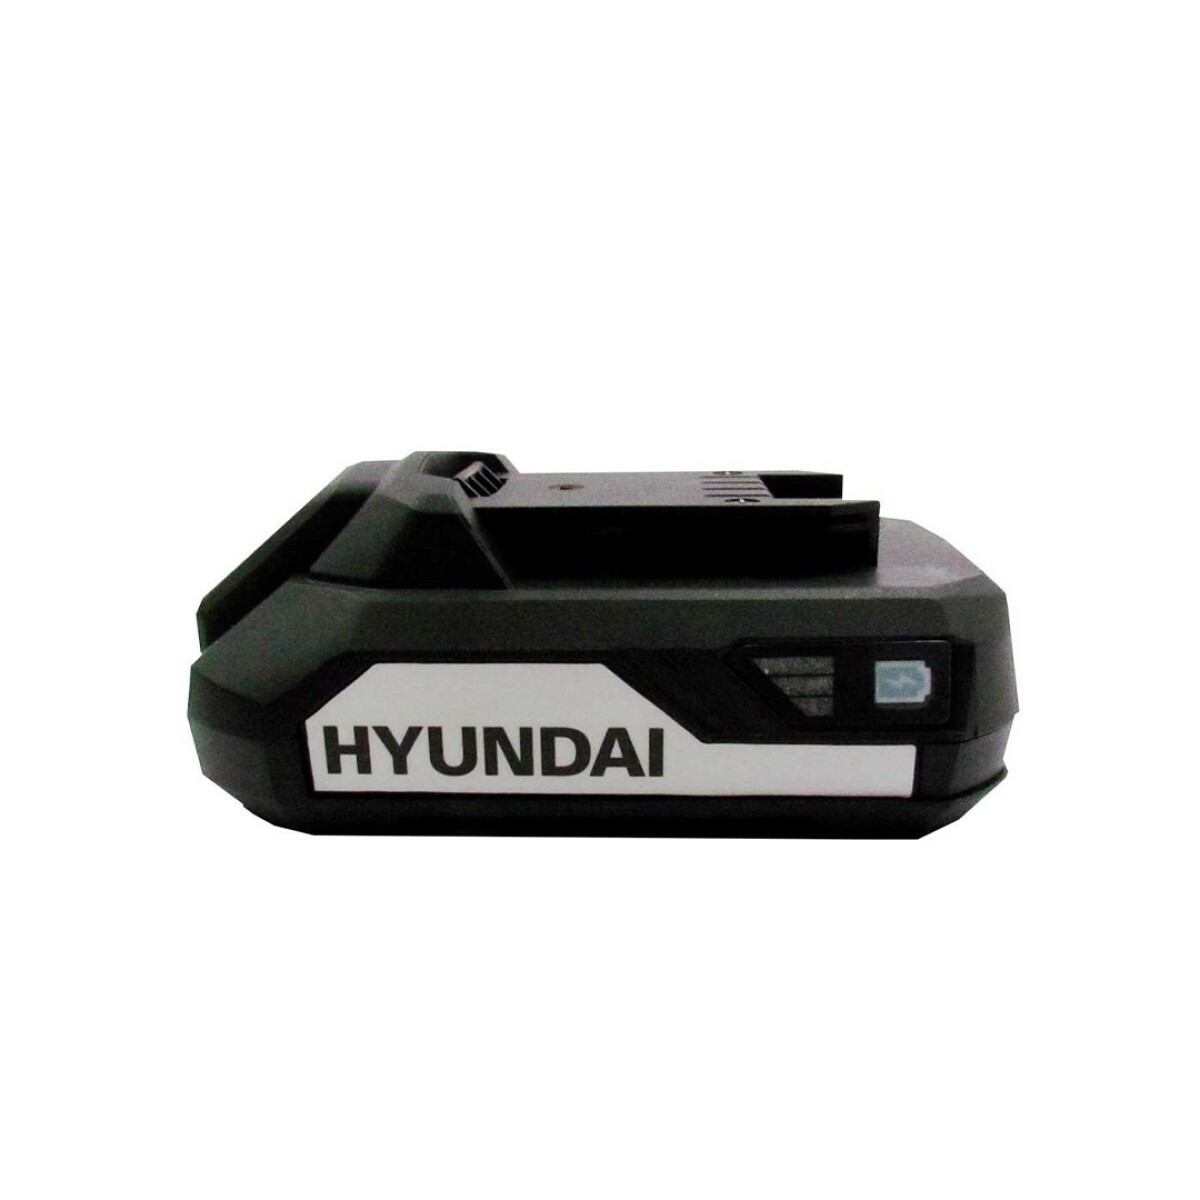 Bateria de Repuesto Hyundai 20V 4MAH 5020 - 001 